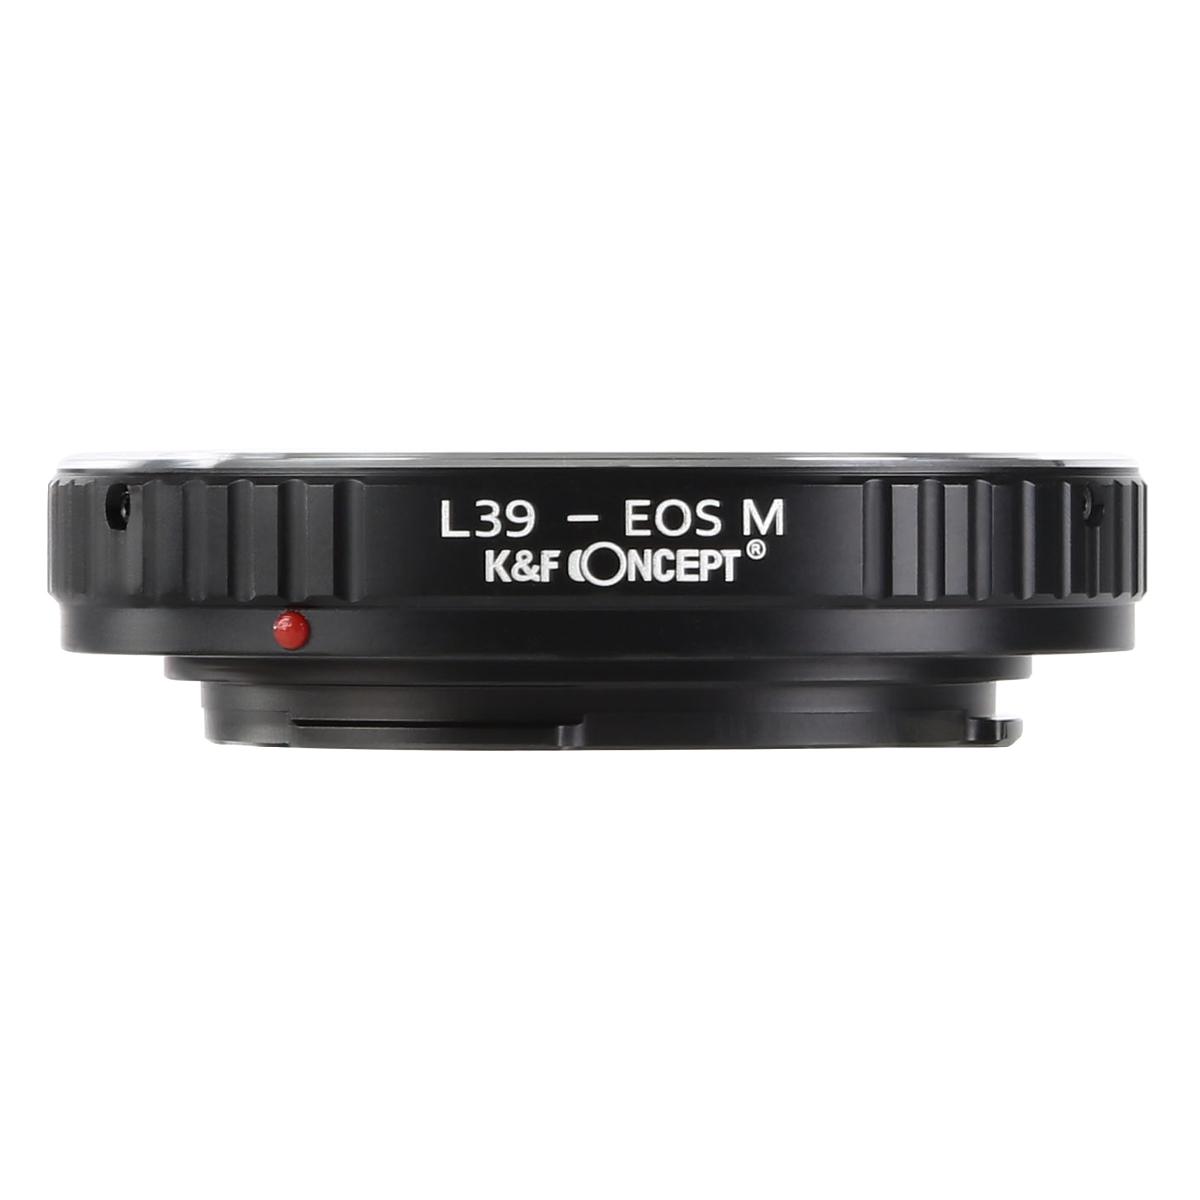 Leica L39 M39 Screw Mount Lens to Canon EOS M EF-M, M39 Lenses to Canon EOS M Lens Mount Adapter K&F Concept M41141 Lens Adapter Non-SLR port M39